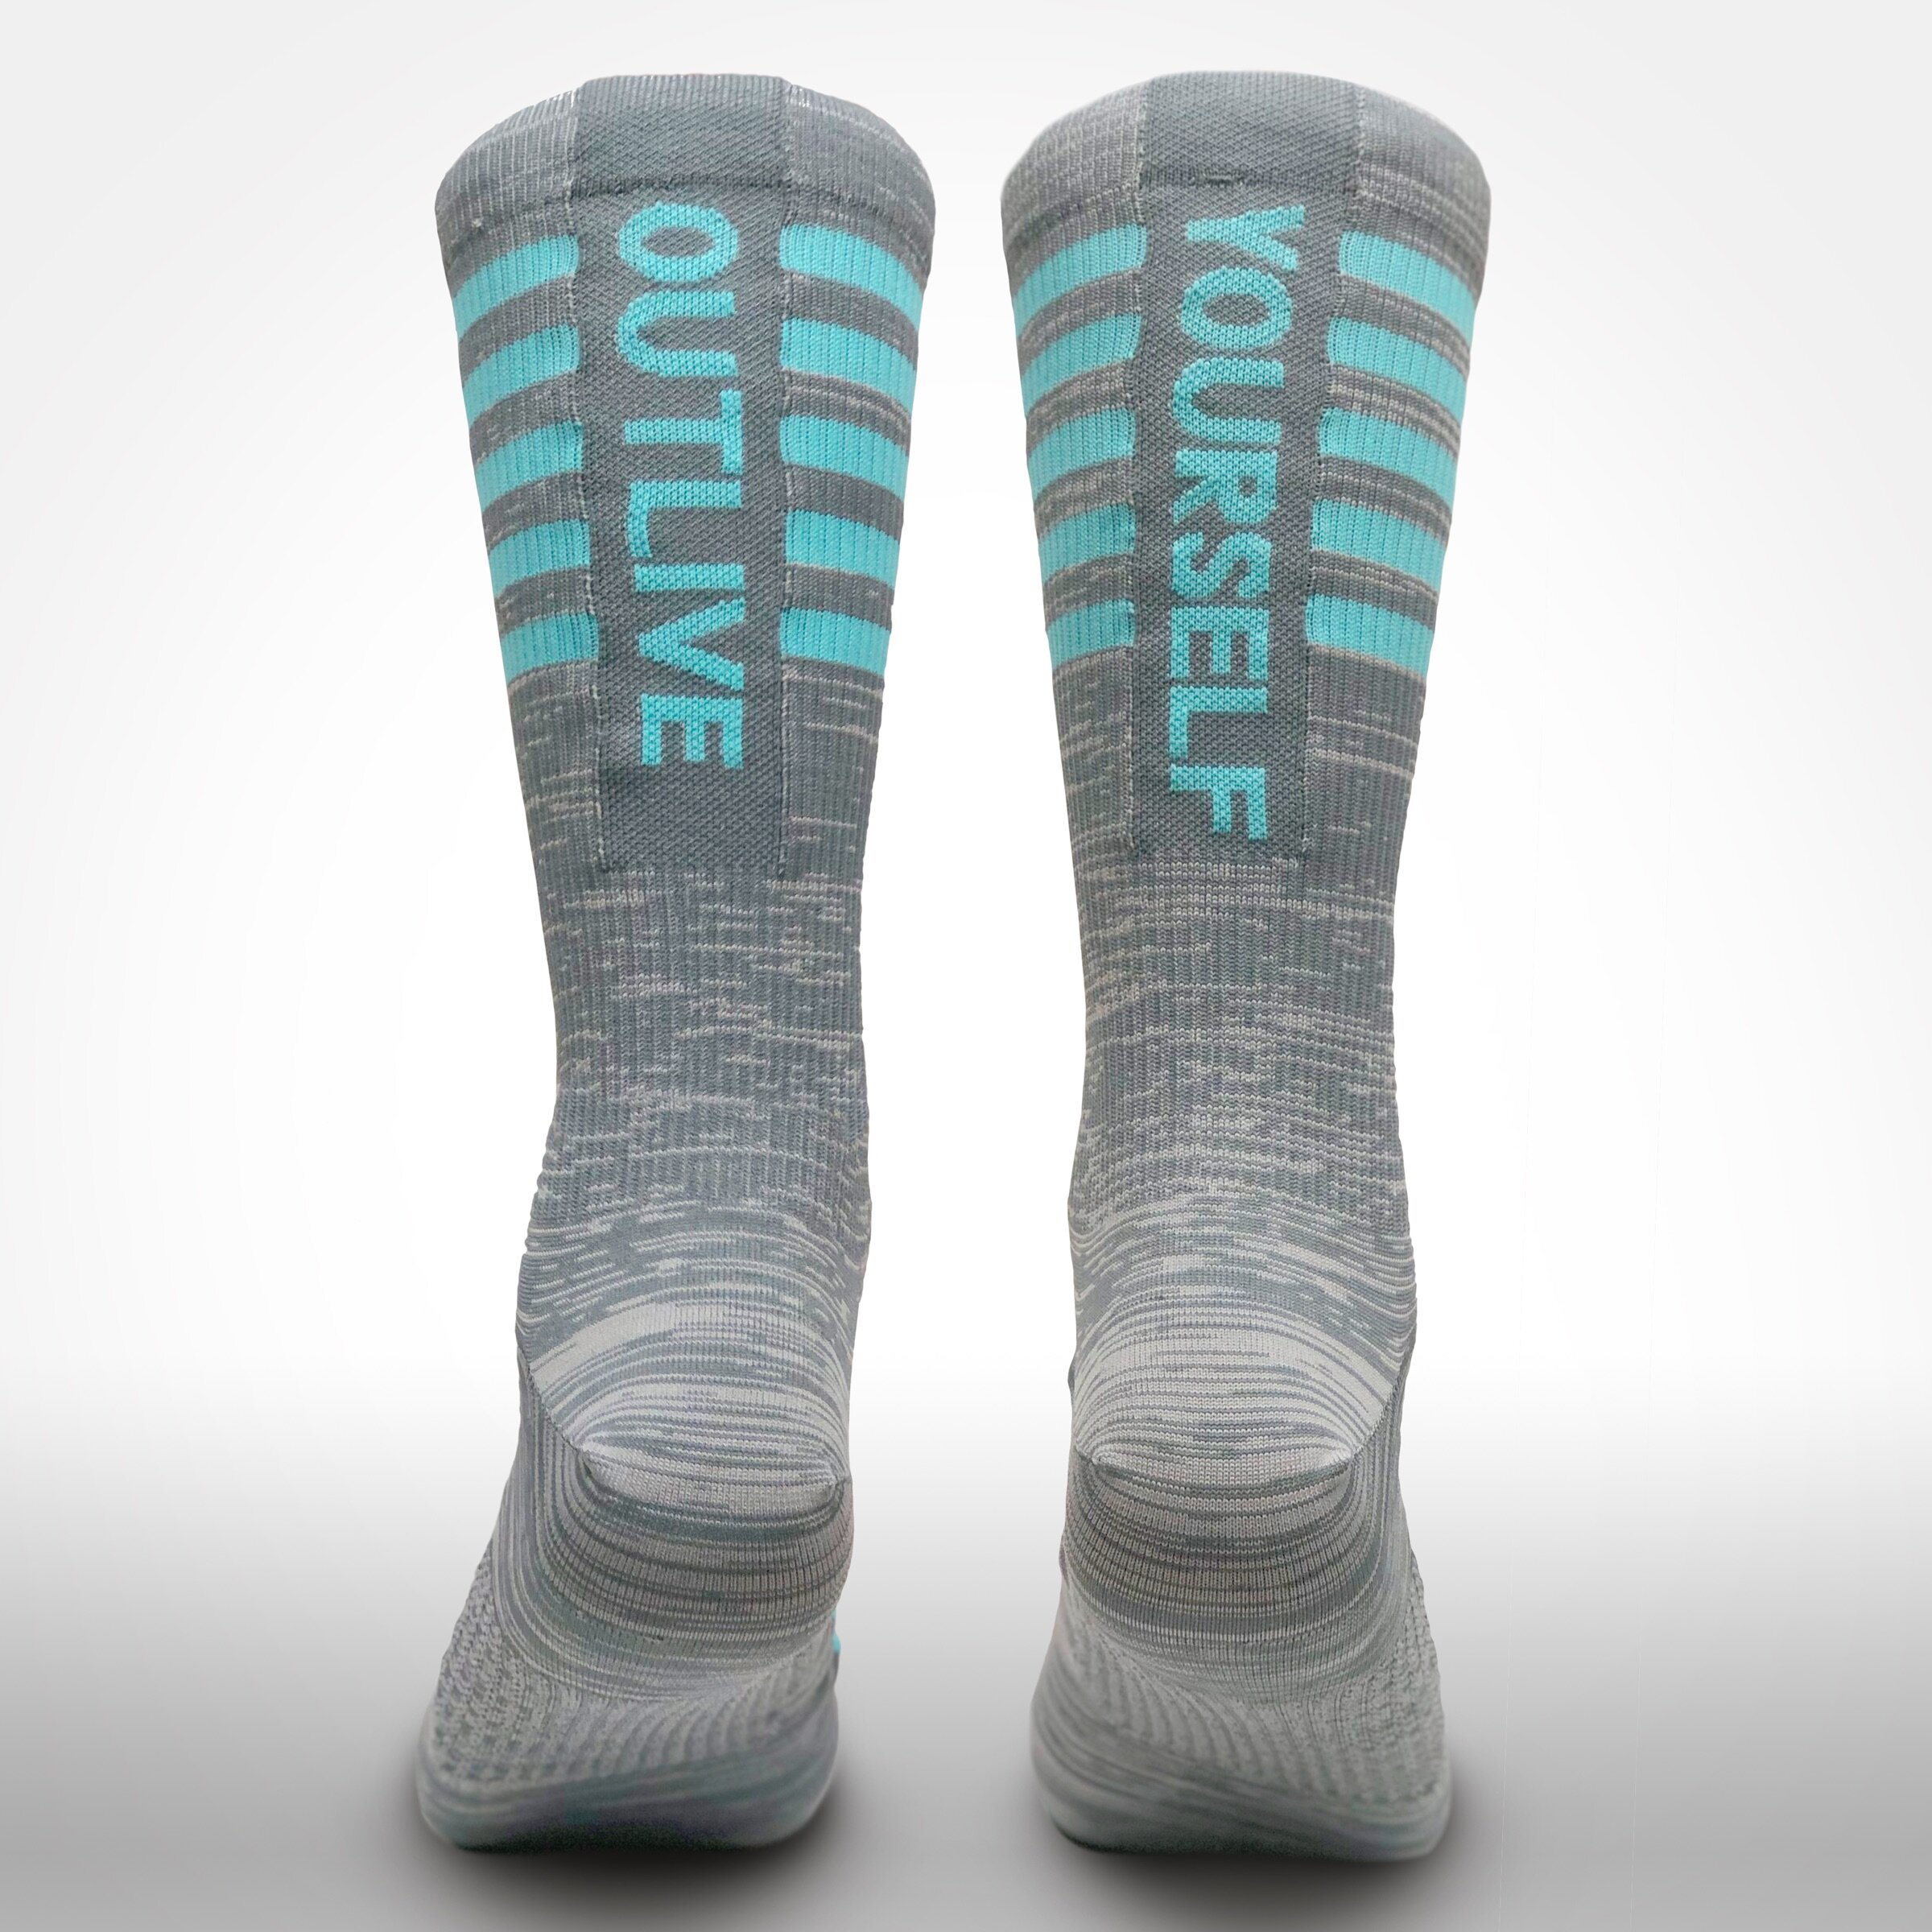 OYF - Nike sock 2 copy.jpg